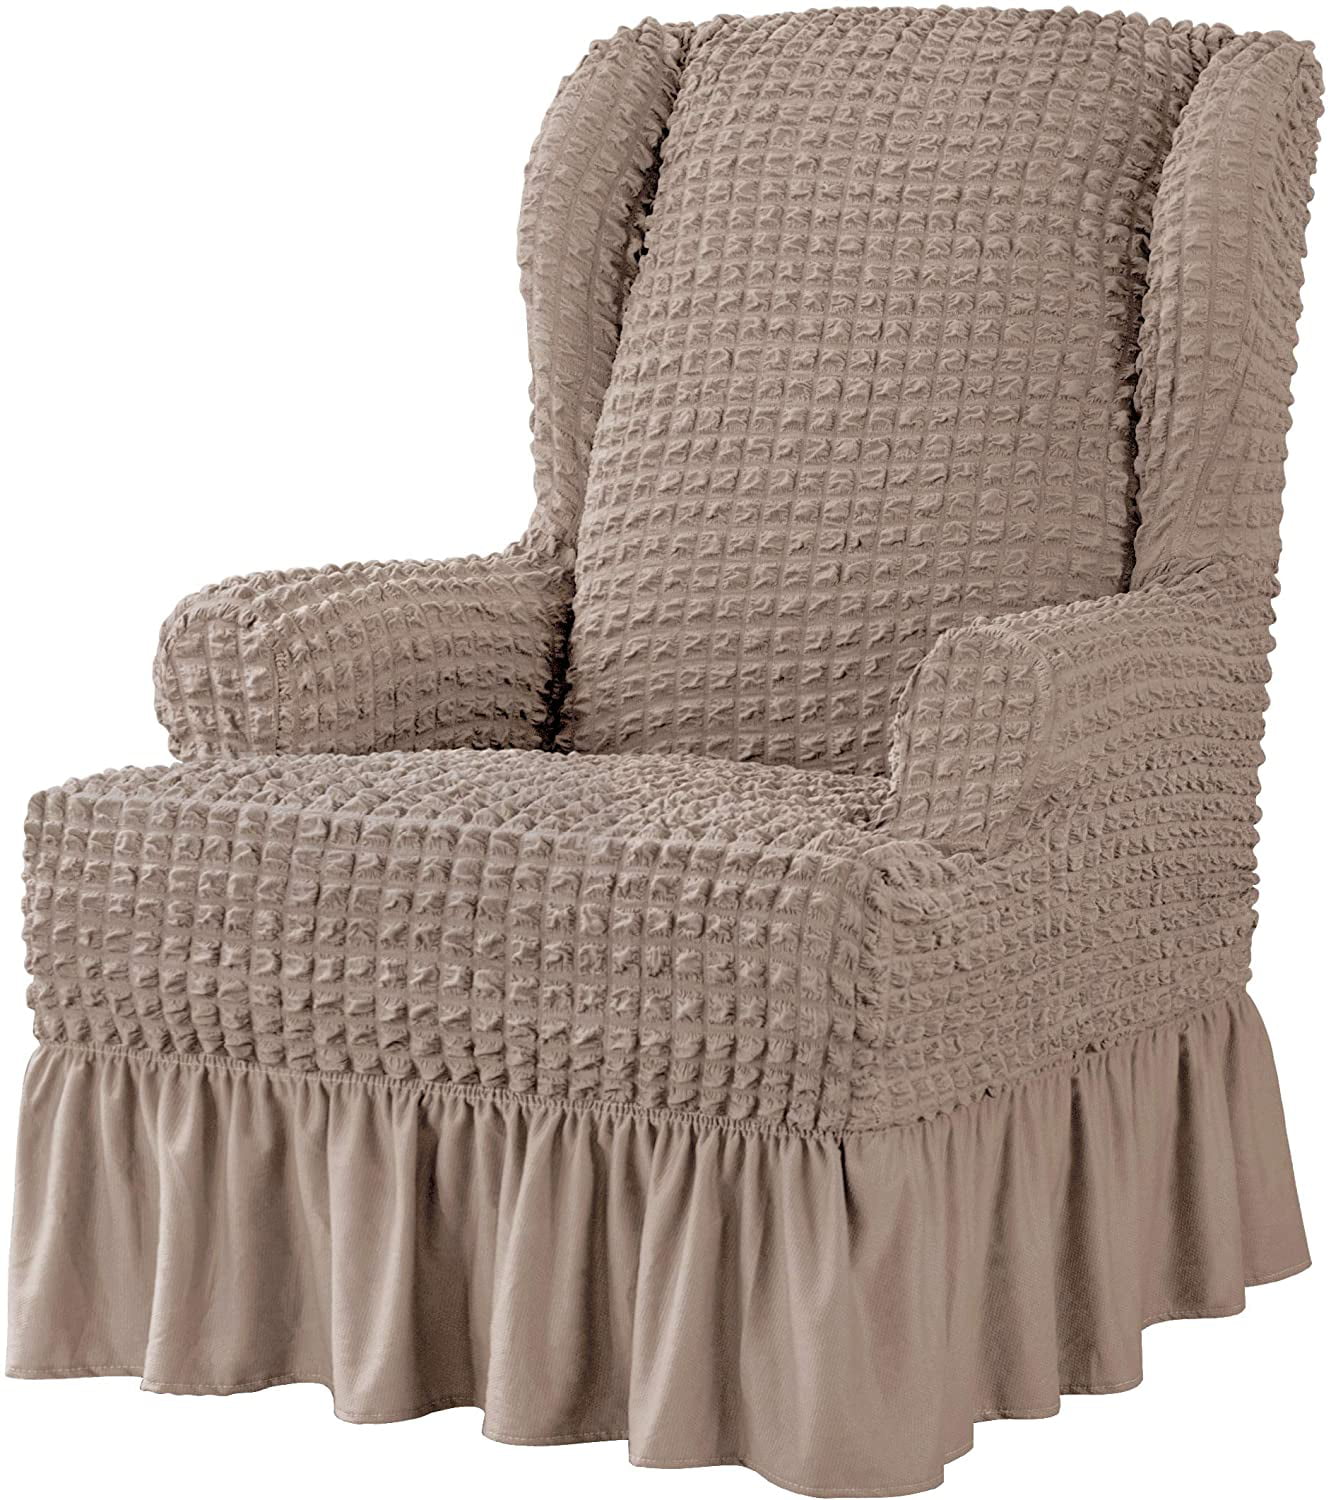 Subrtex Stretch 1 Piece Pleated Ruffled Skirt Wingback Chair Slipcover Oatmeal Walmart Com Walmart Com